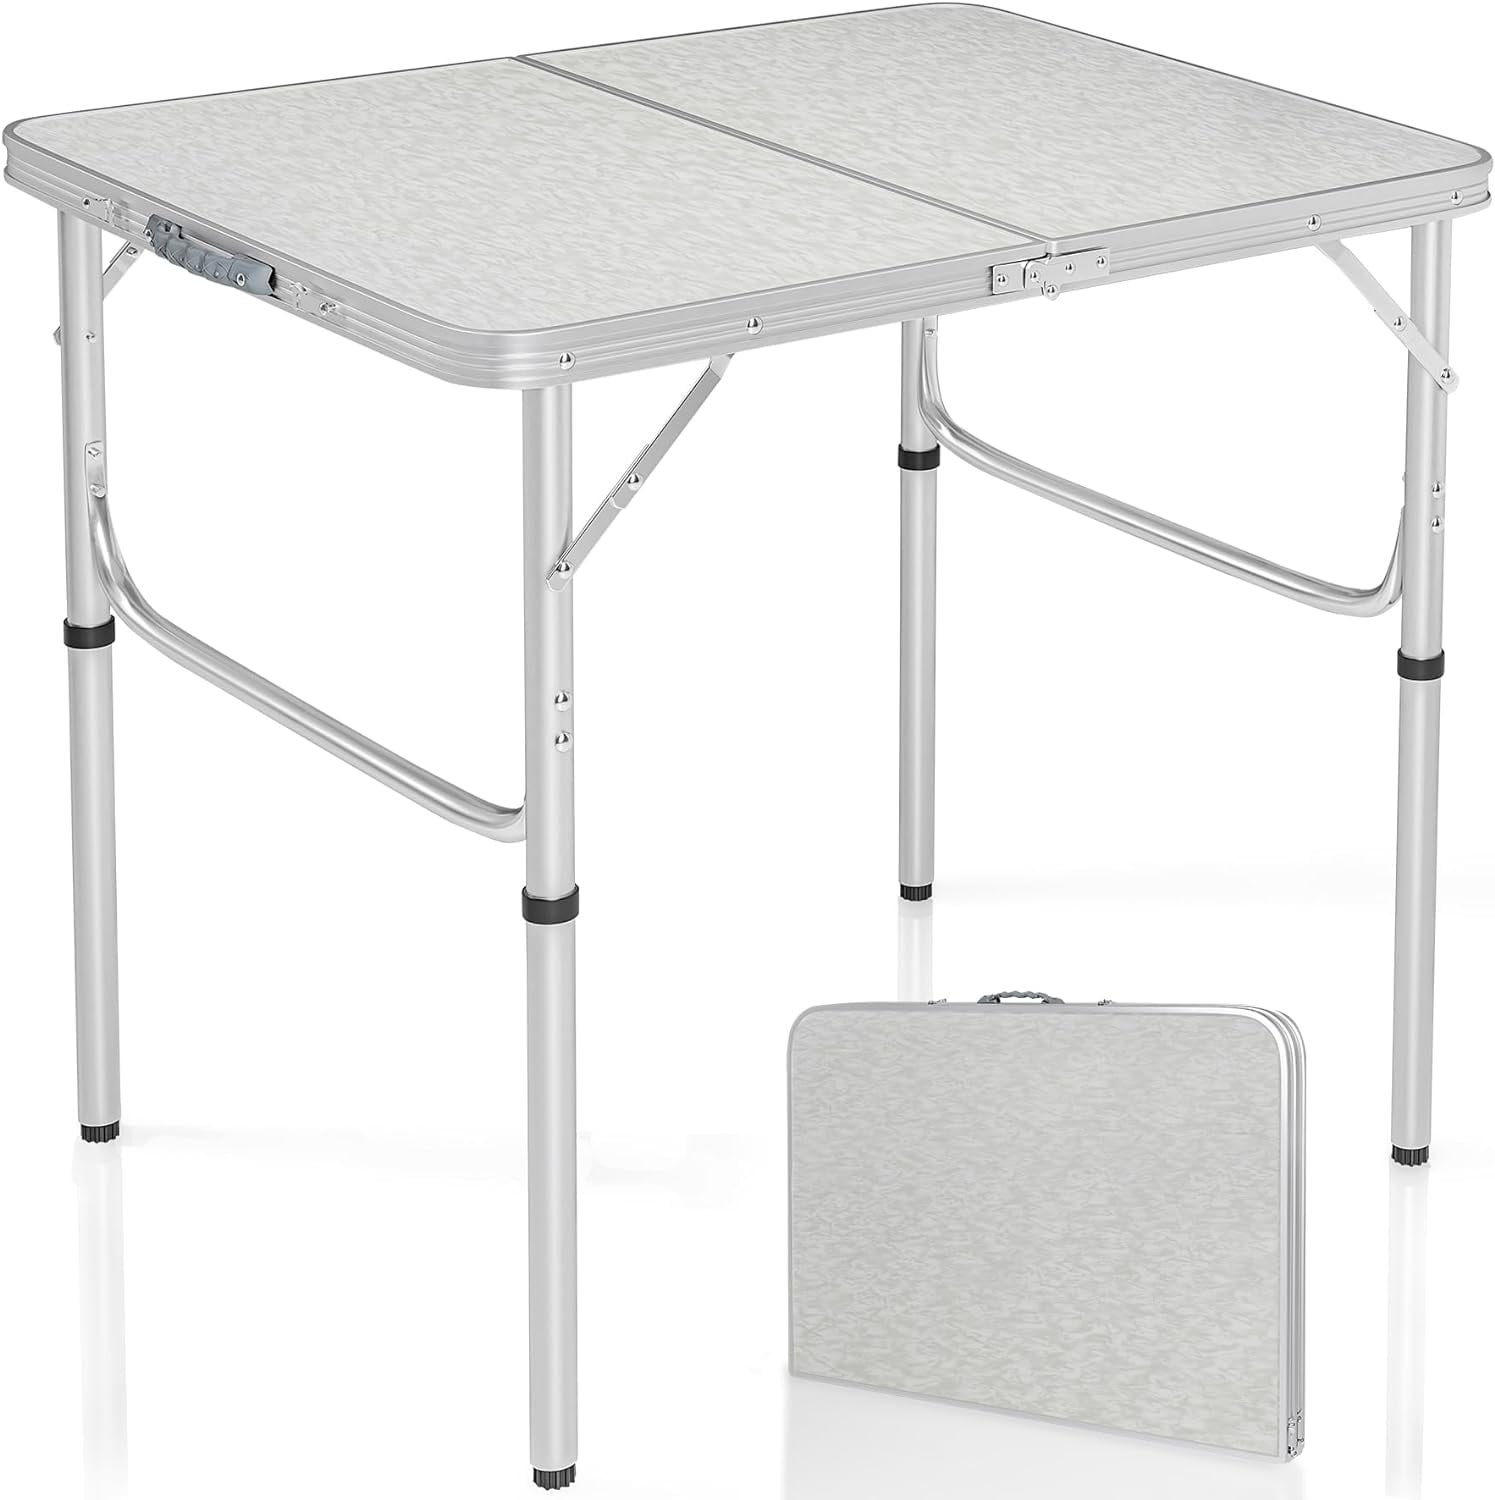 Buy KingCamp Camping Table Aluminum Folding Portable Table